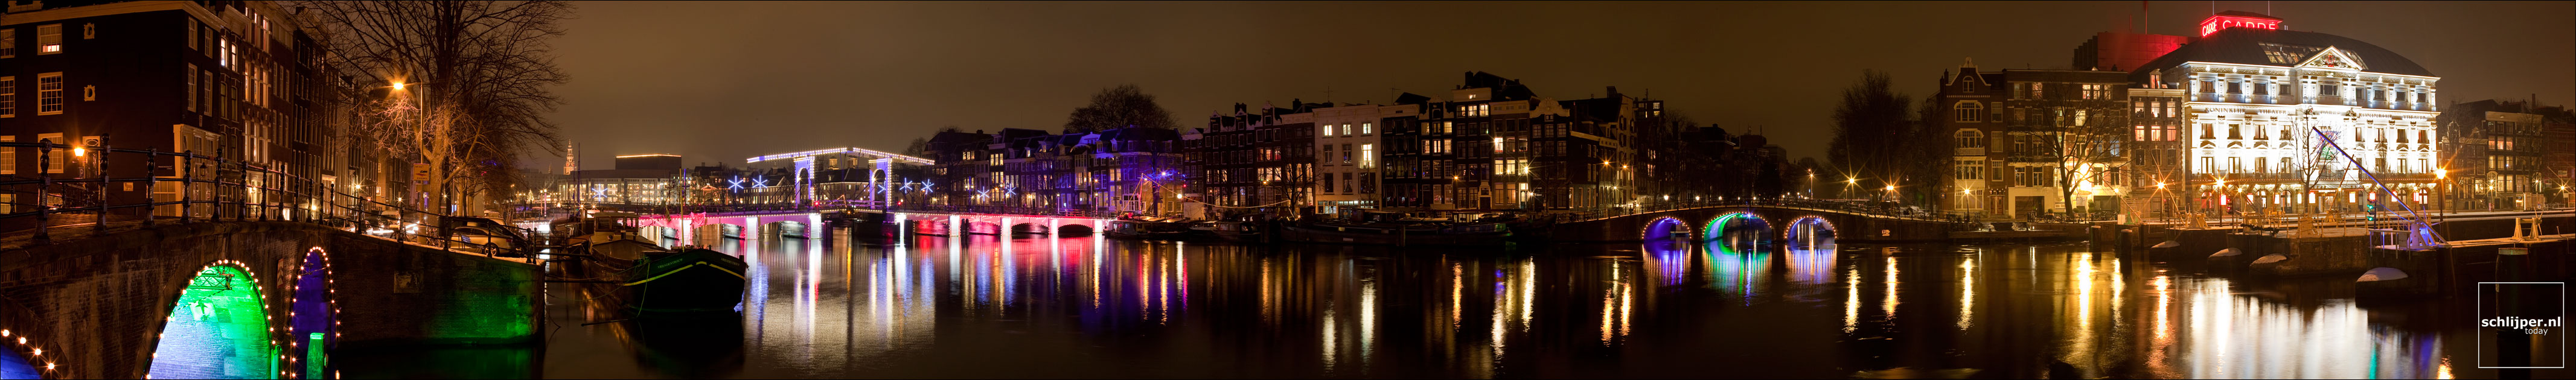 Nederland, Amsterdam, 29 december 2010